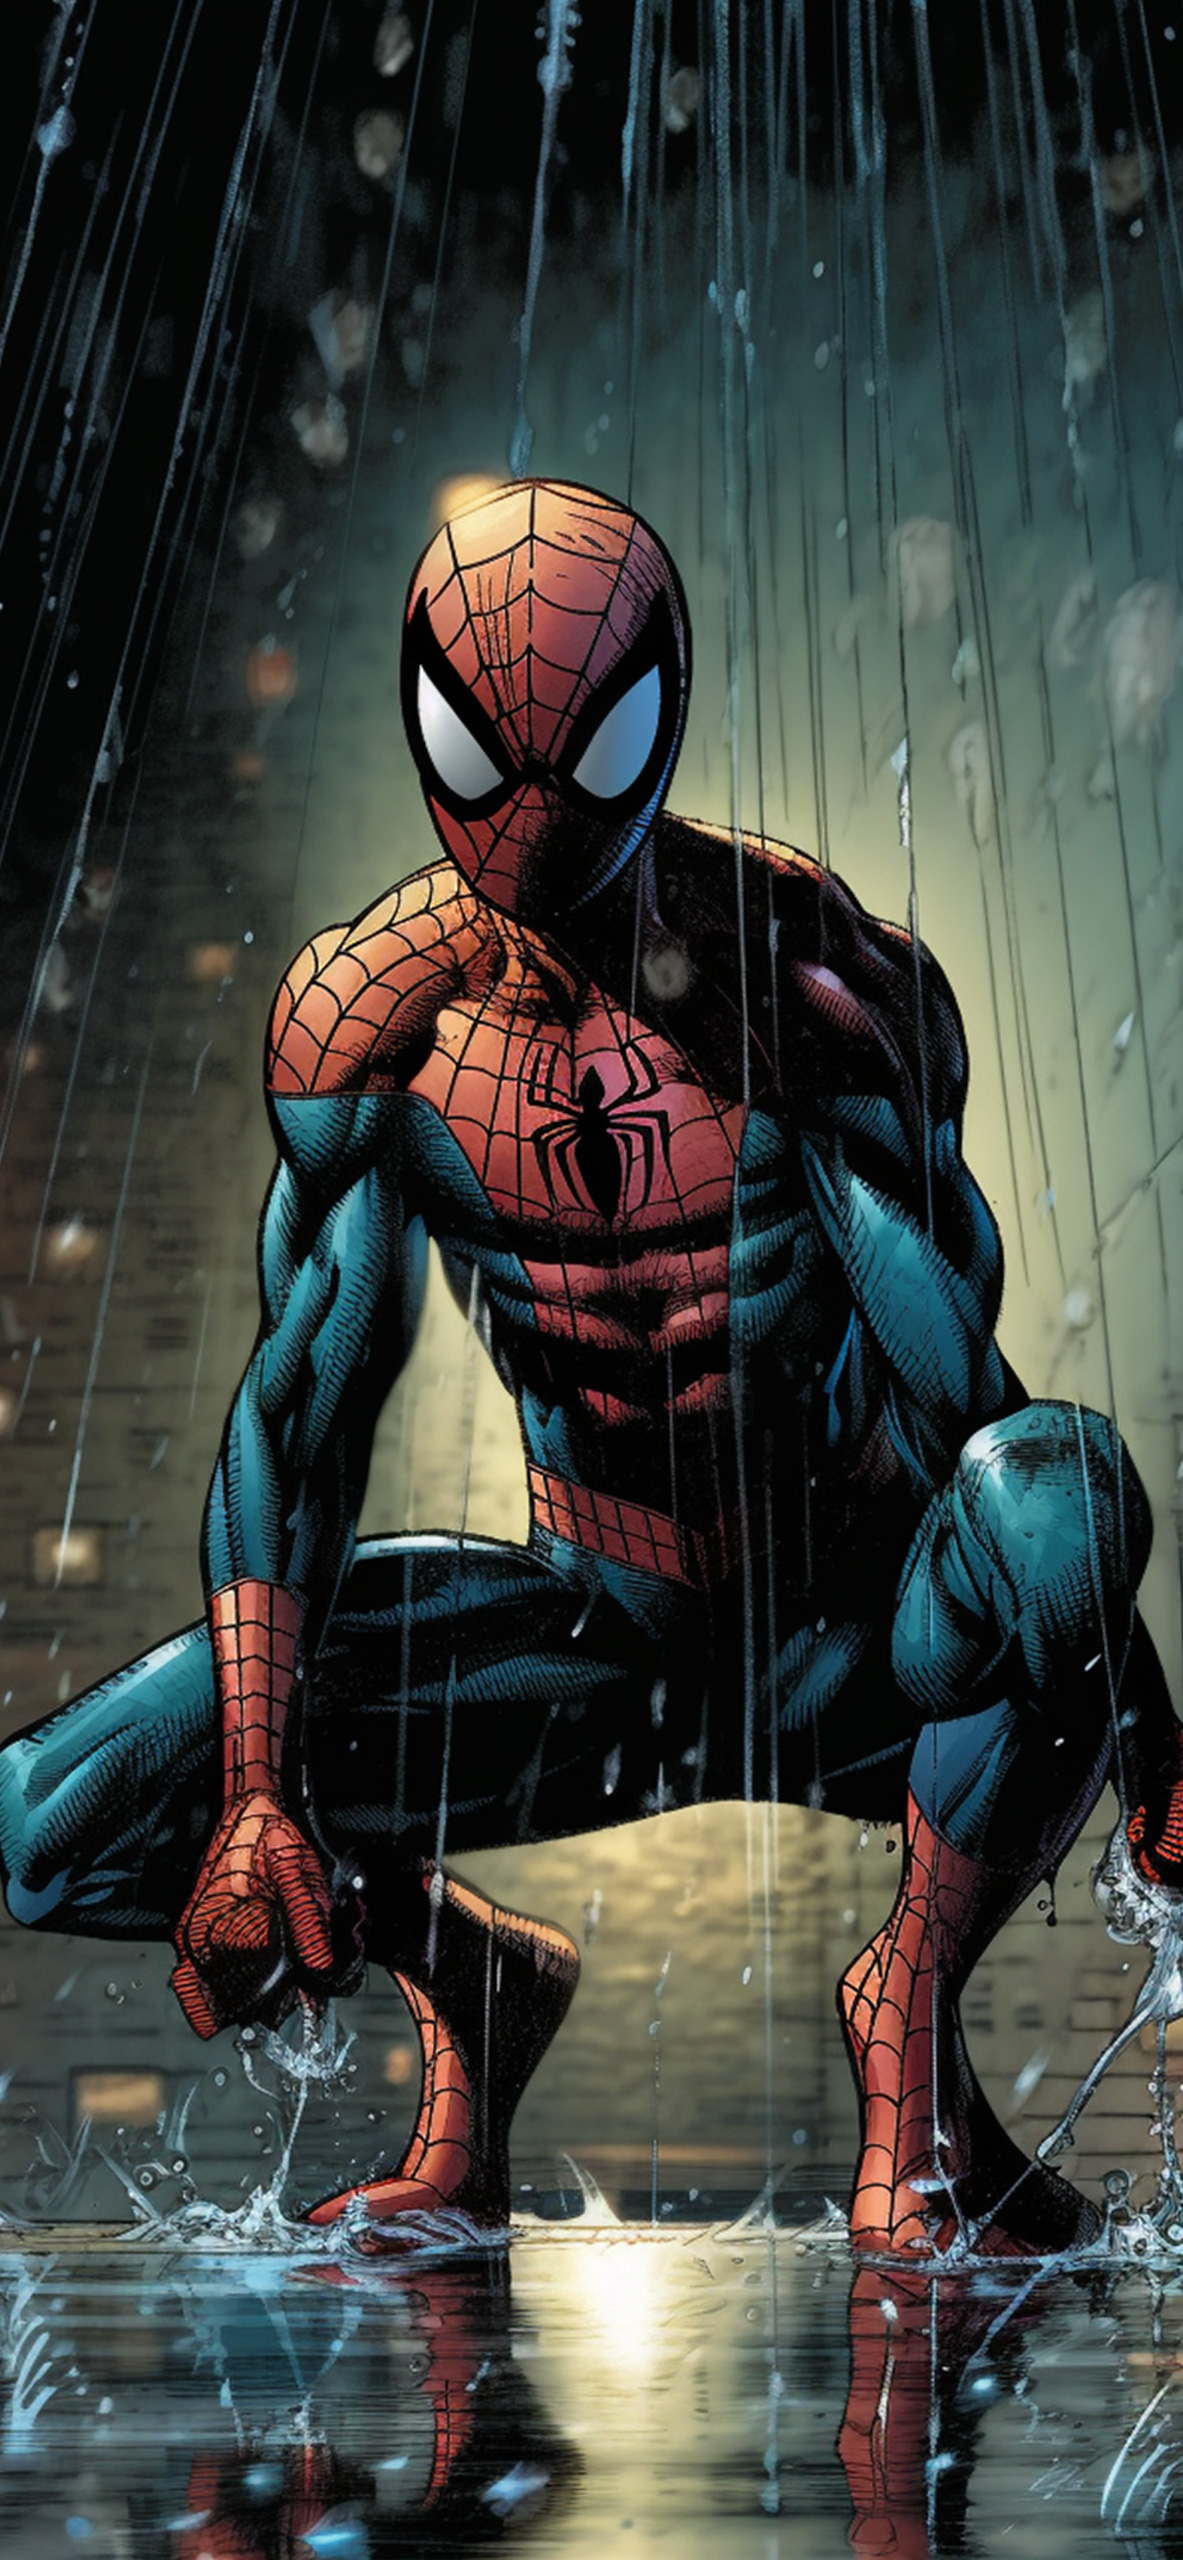 Marvel Spider-Man wallpaper HD wallpapers free download | Wallpaperbetter